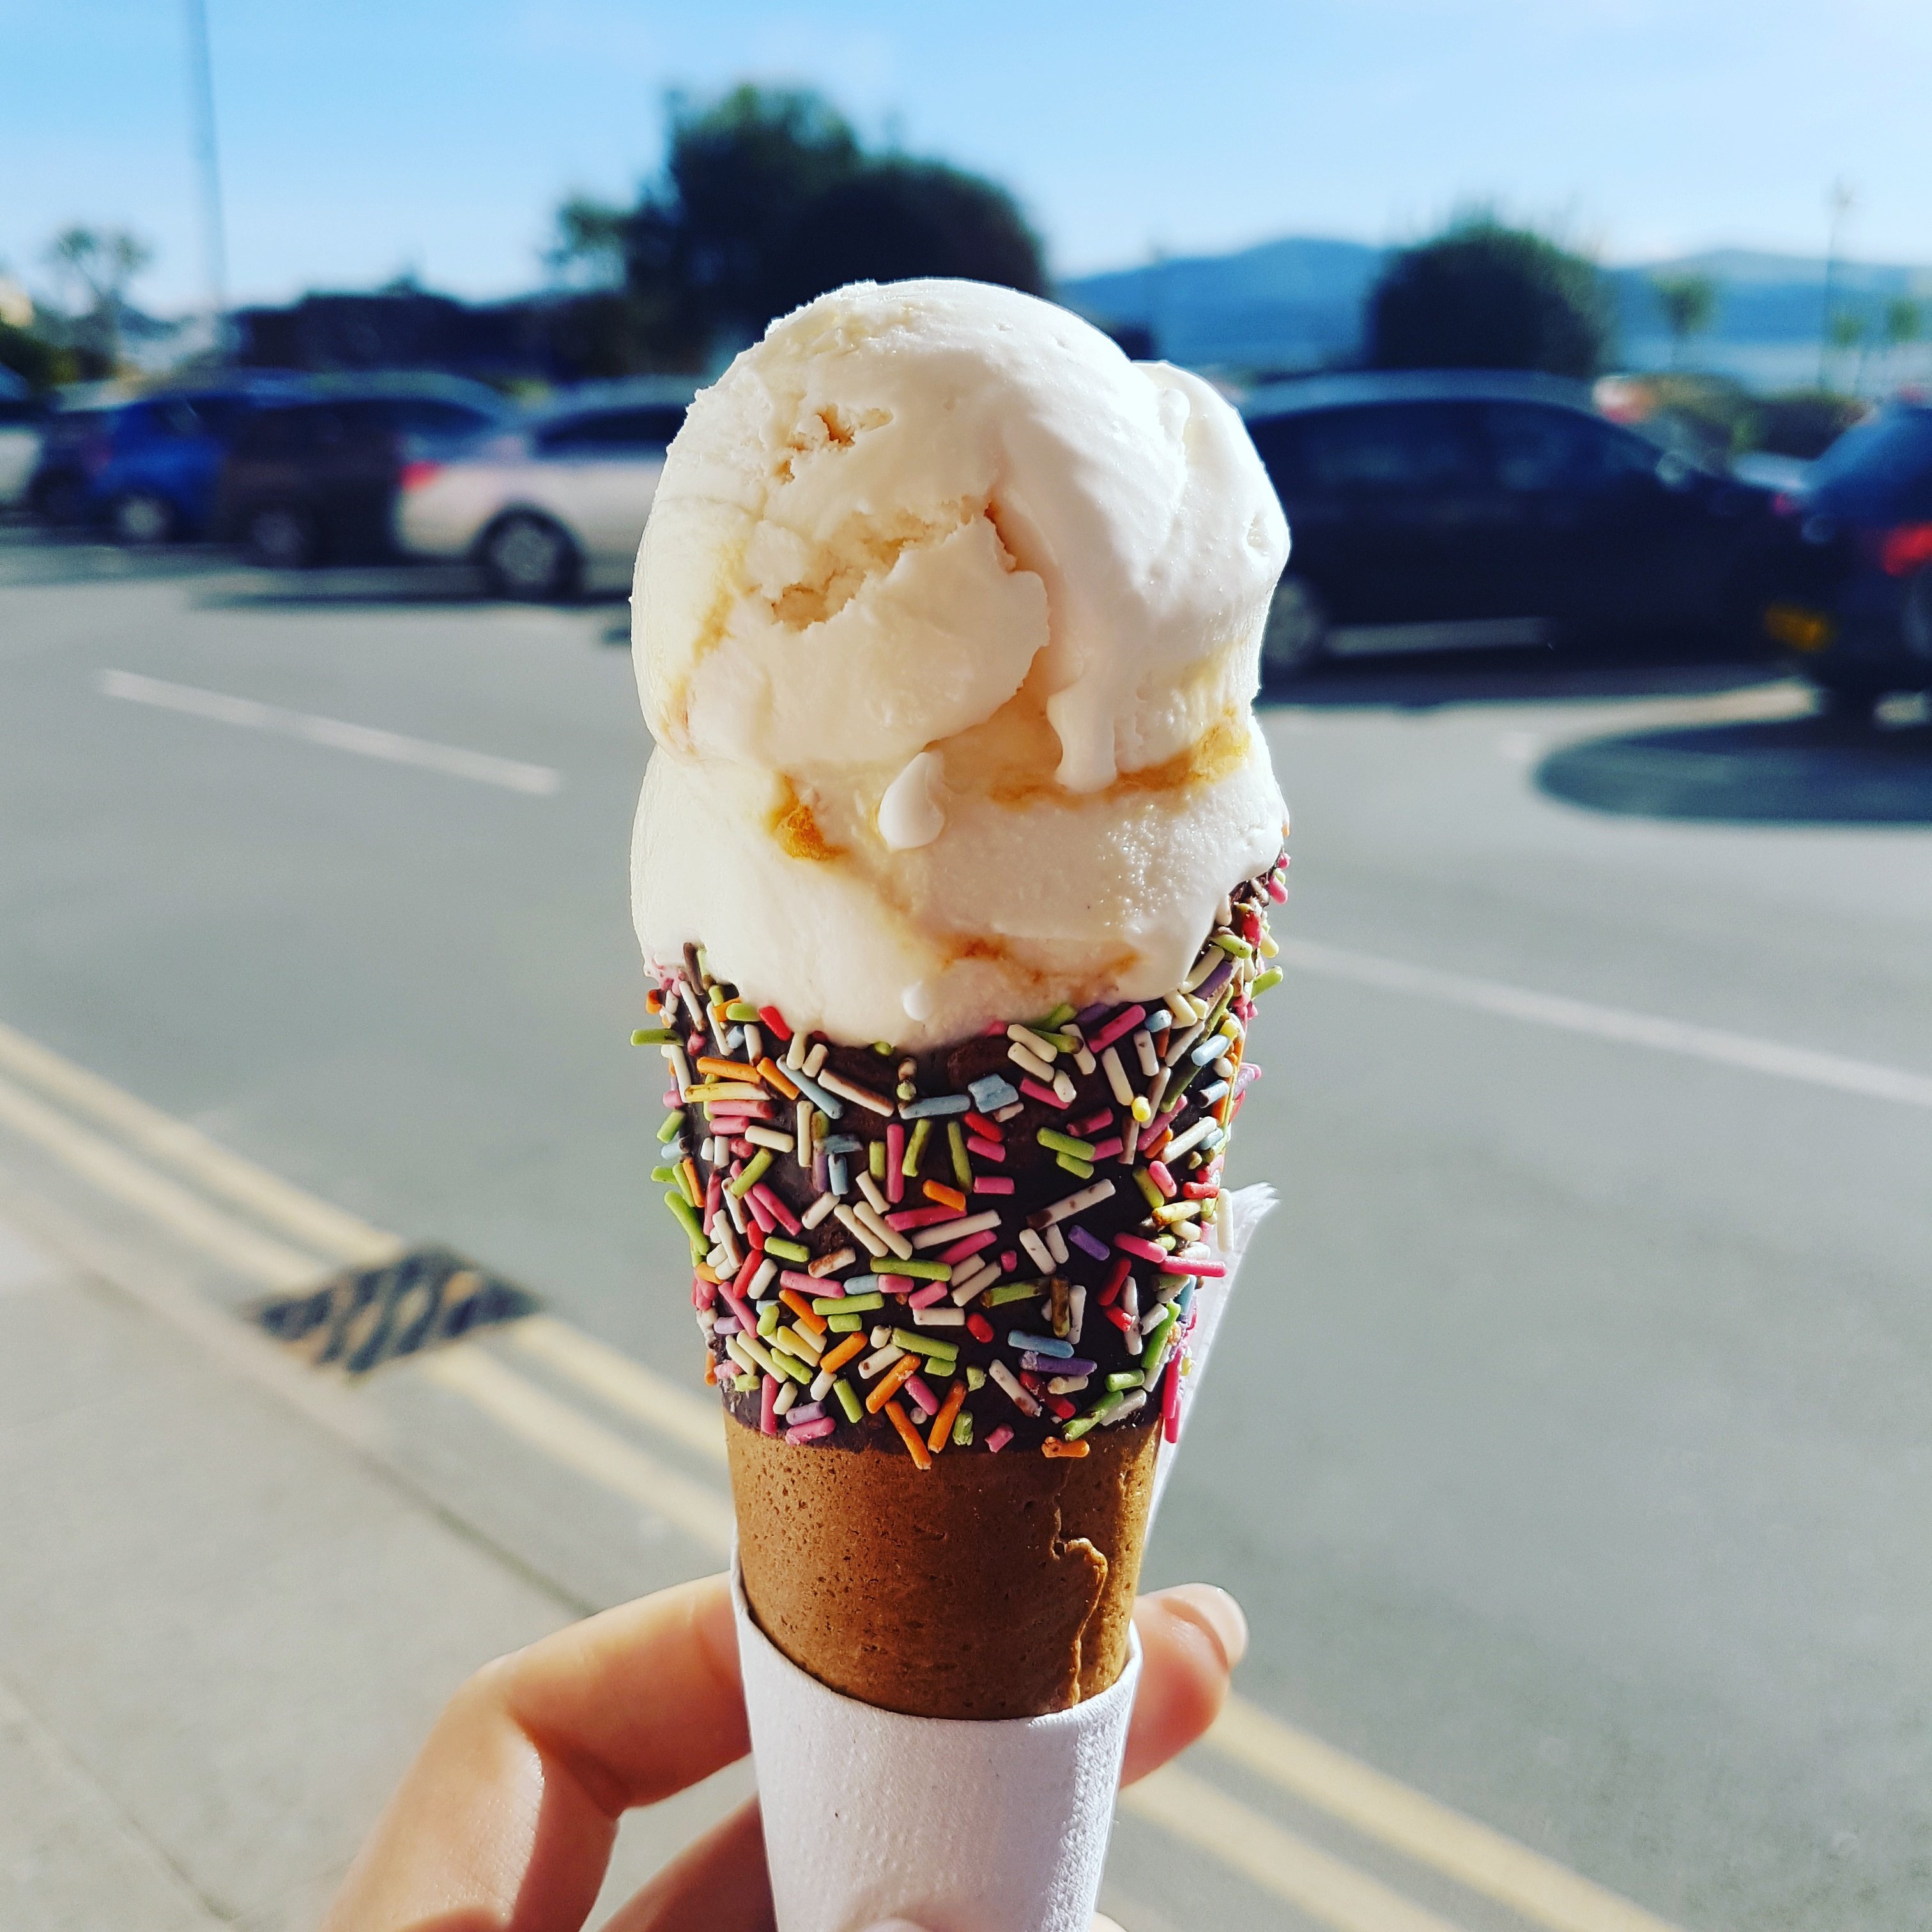 The Sweet Shop- Home of Aberdyfi Ice Cream